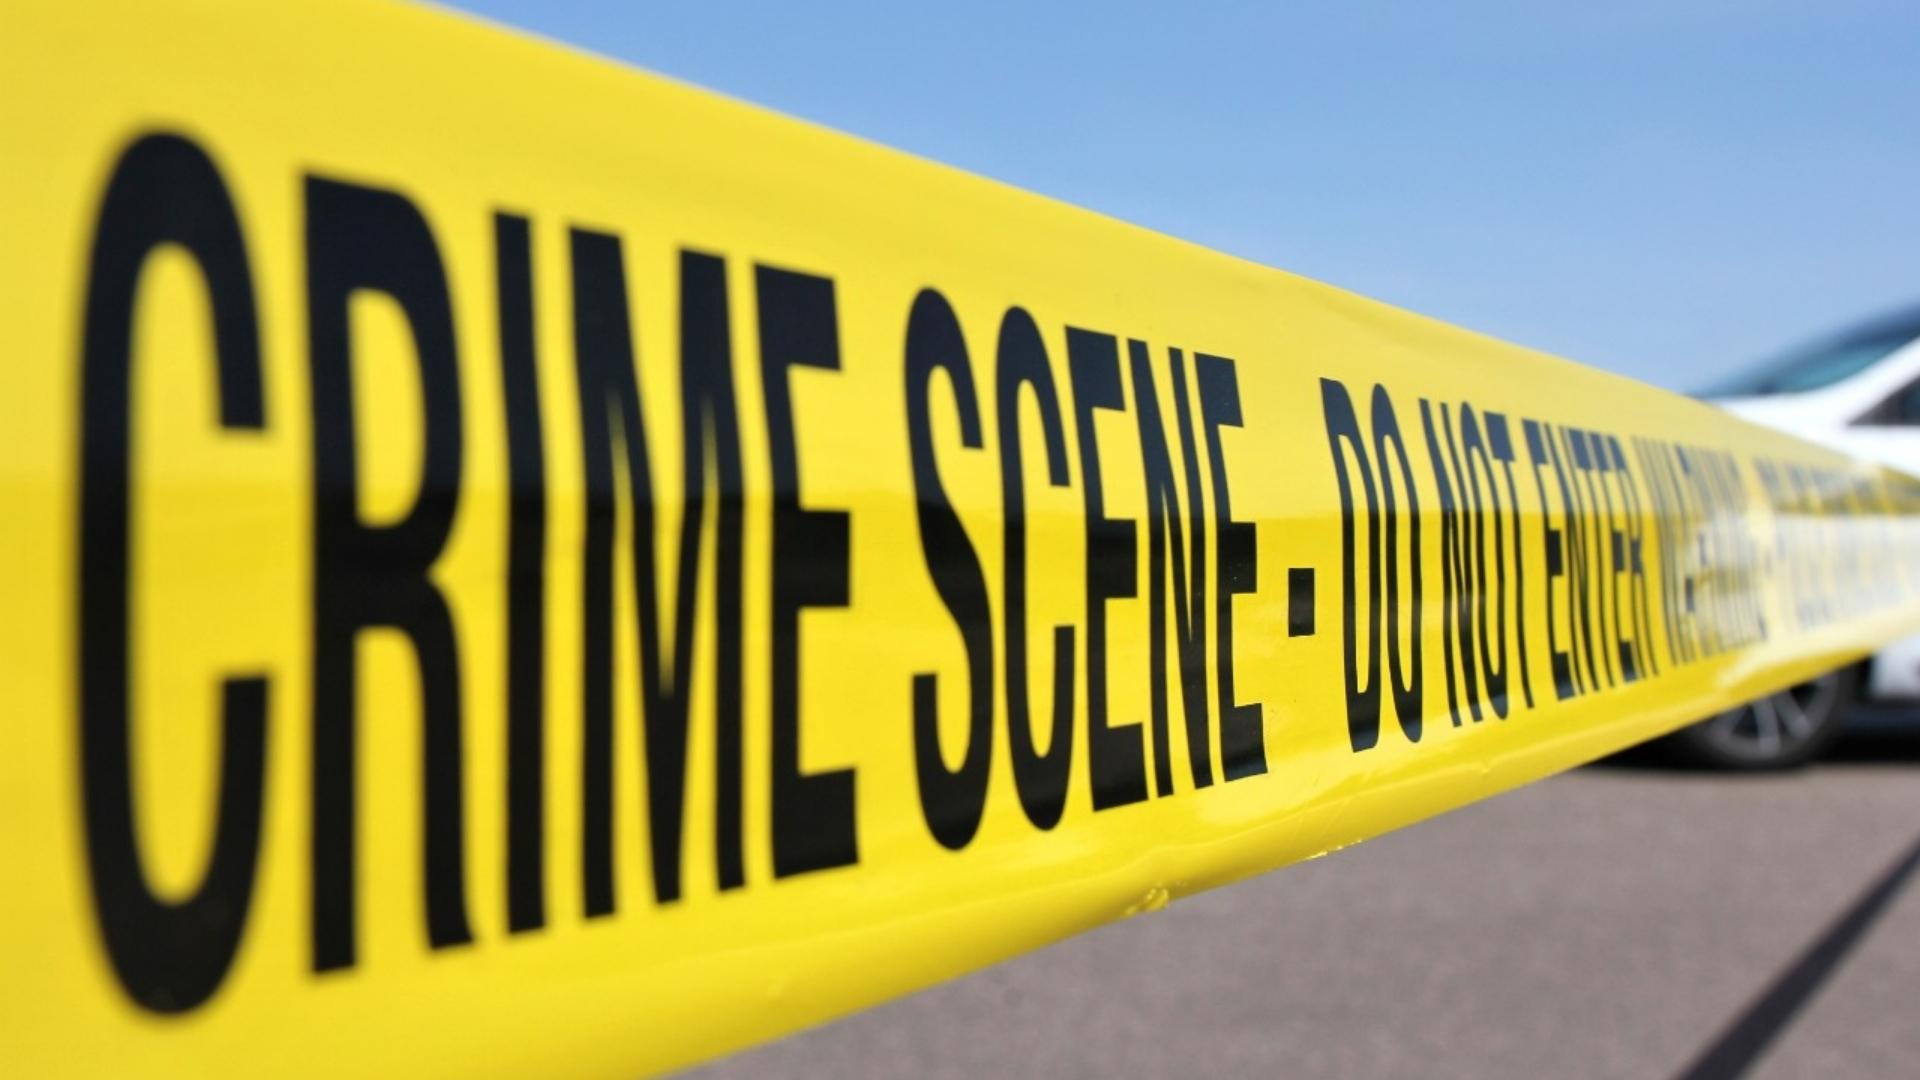 Escena del crimen, imagen de referencia. Foto: Shutterstock